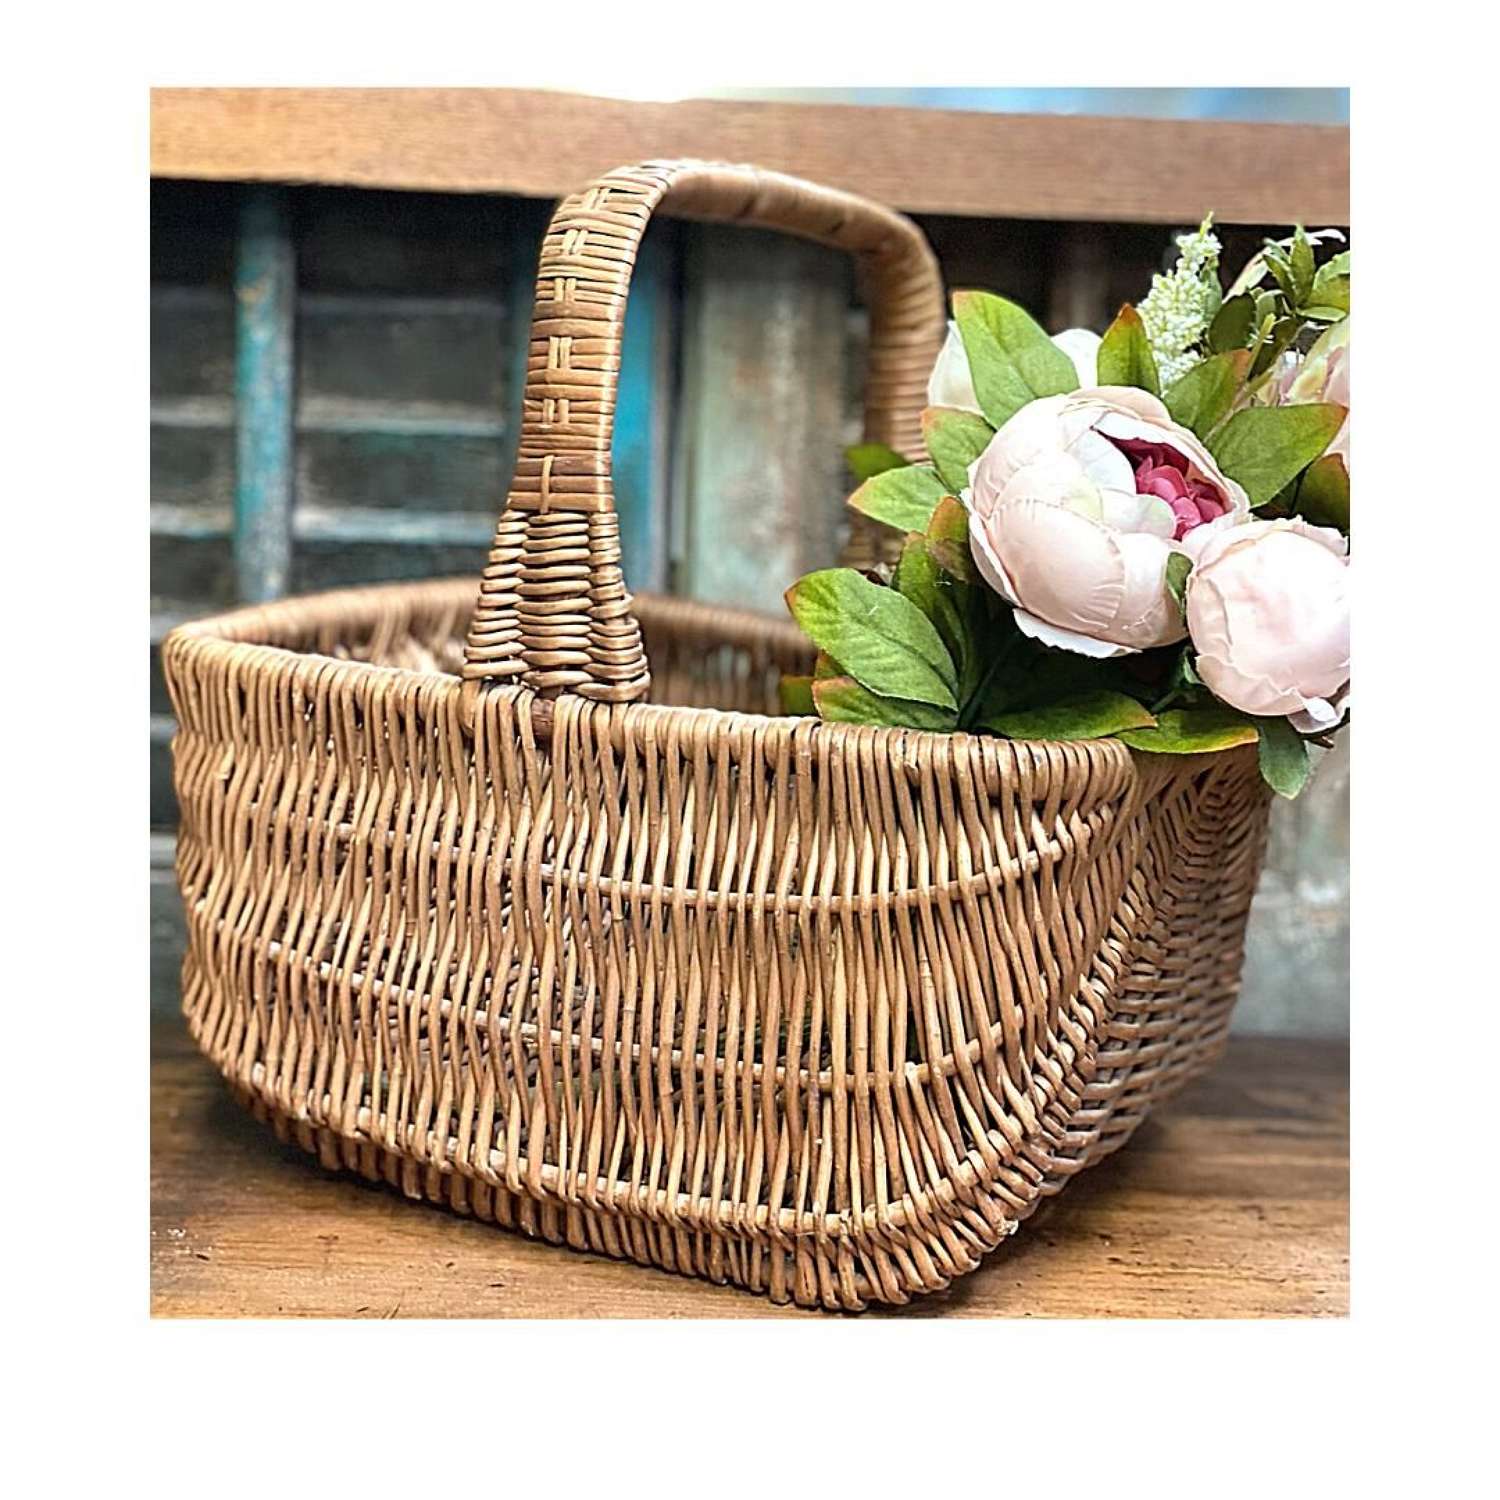 Small basket